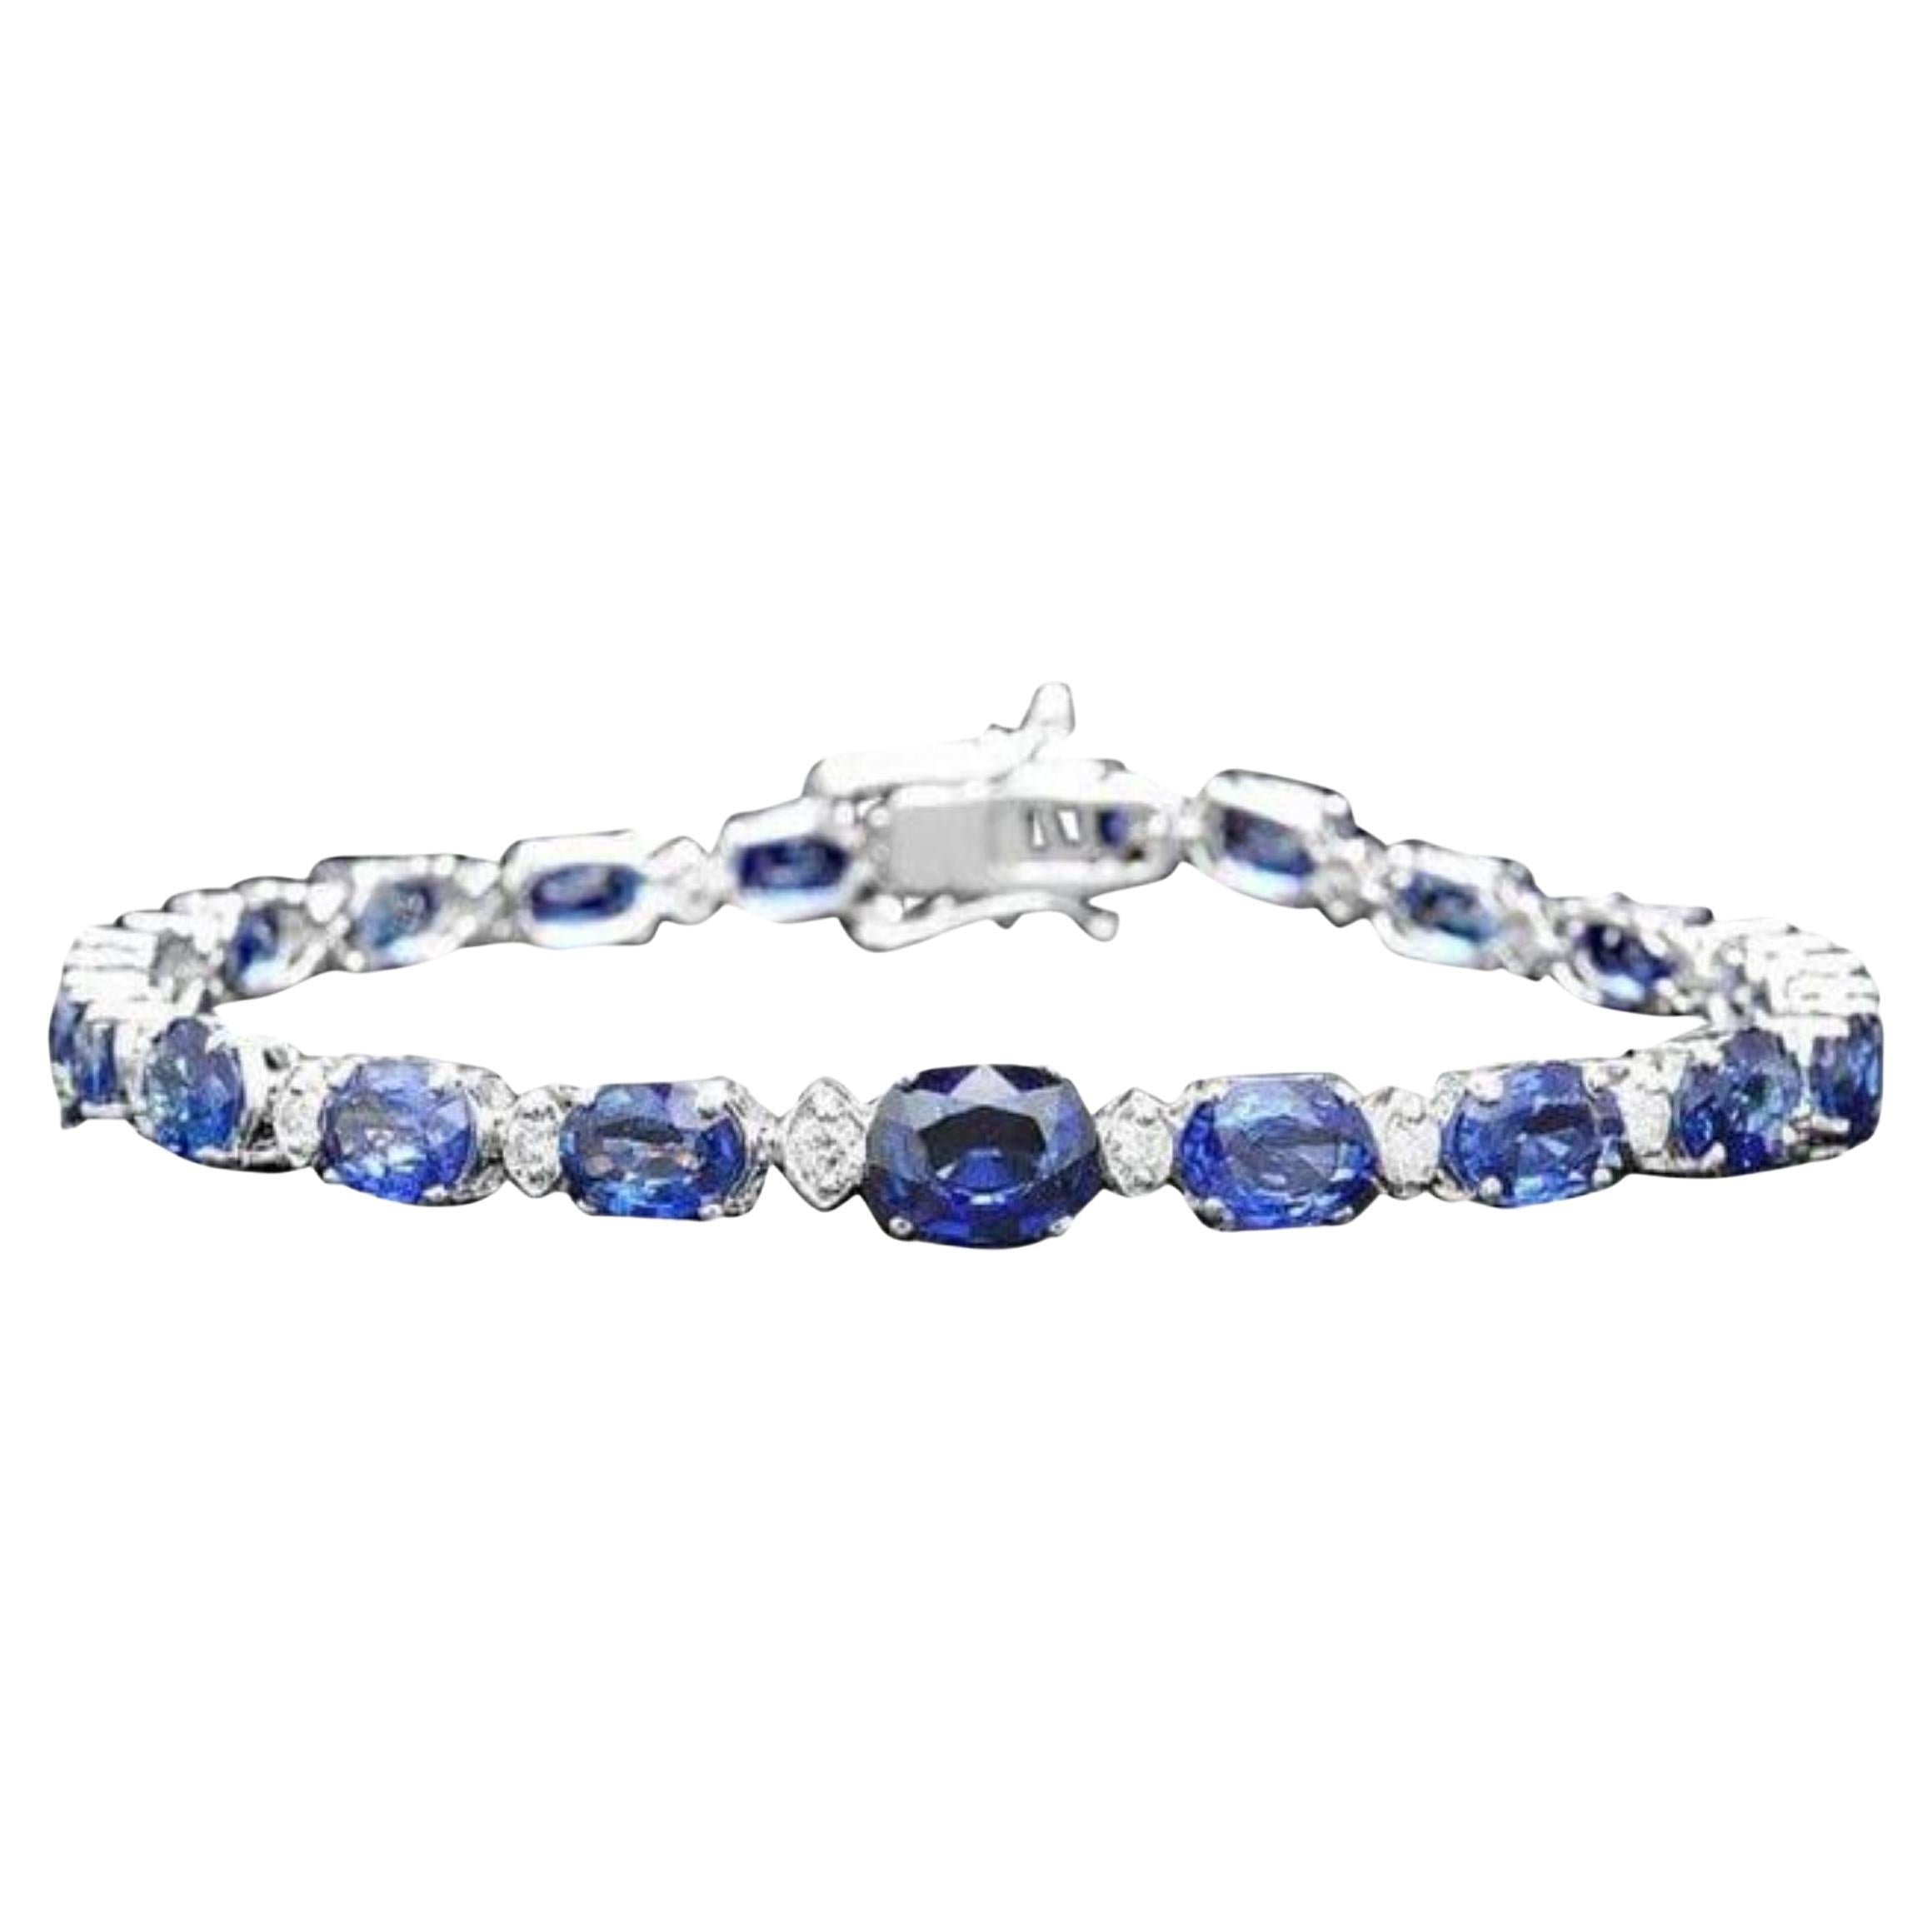 Bracelet en or blanc massif 14 carats avec saphir bleu naturel de 14,50 carats et diamants